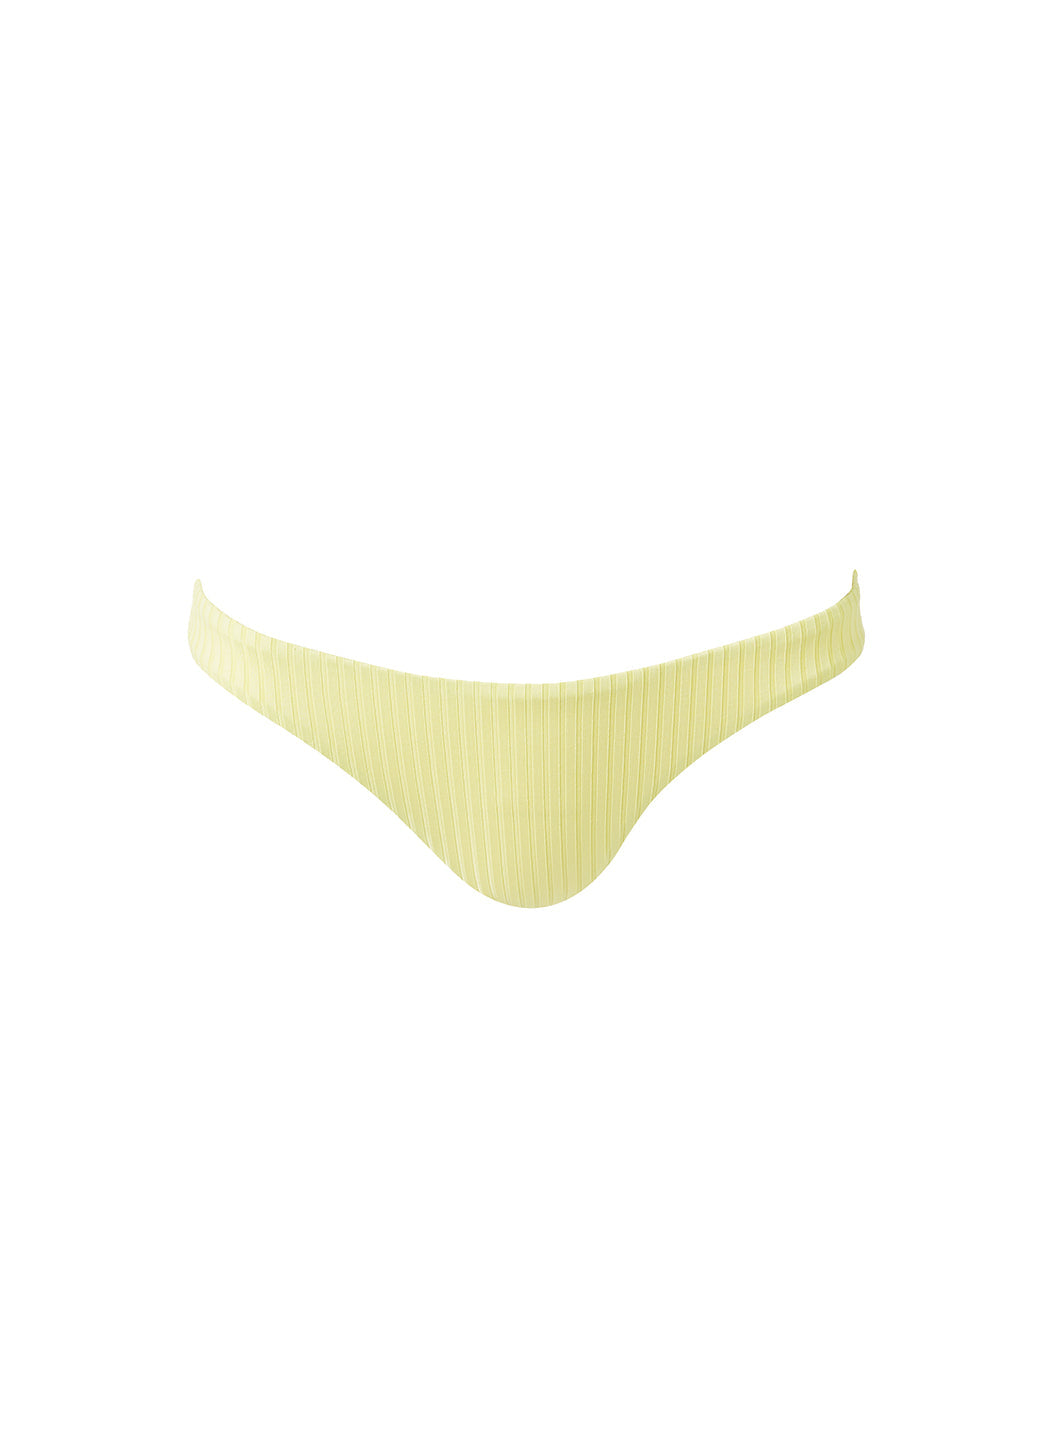 Melissa Odabash Monaco Yellow Bralette Bikini Top